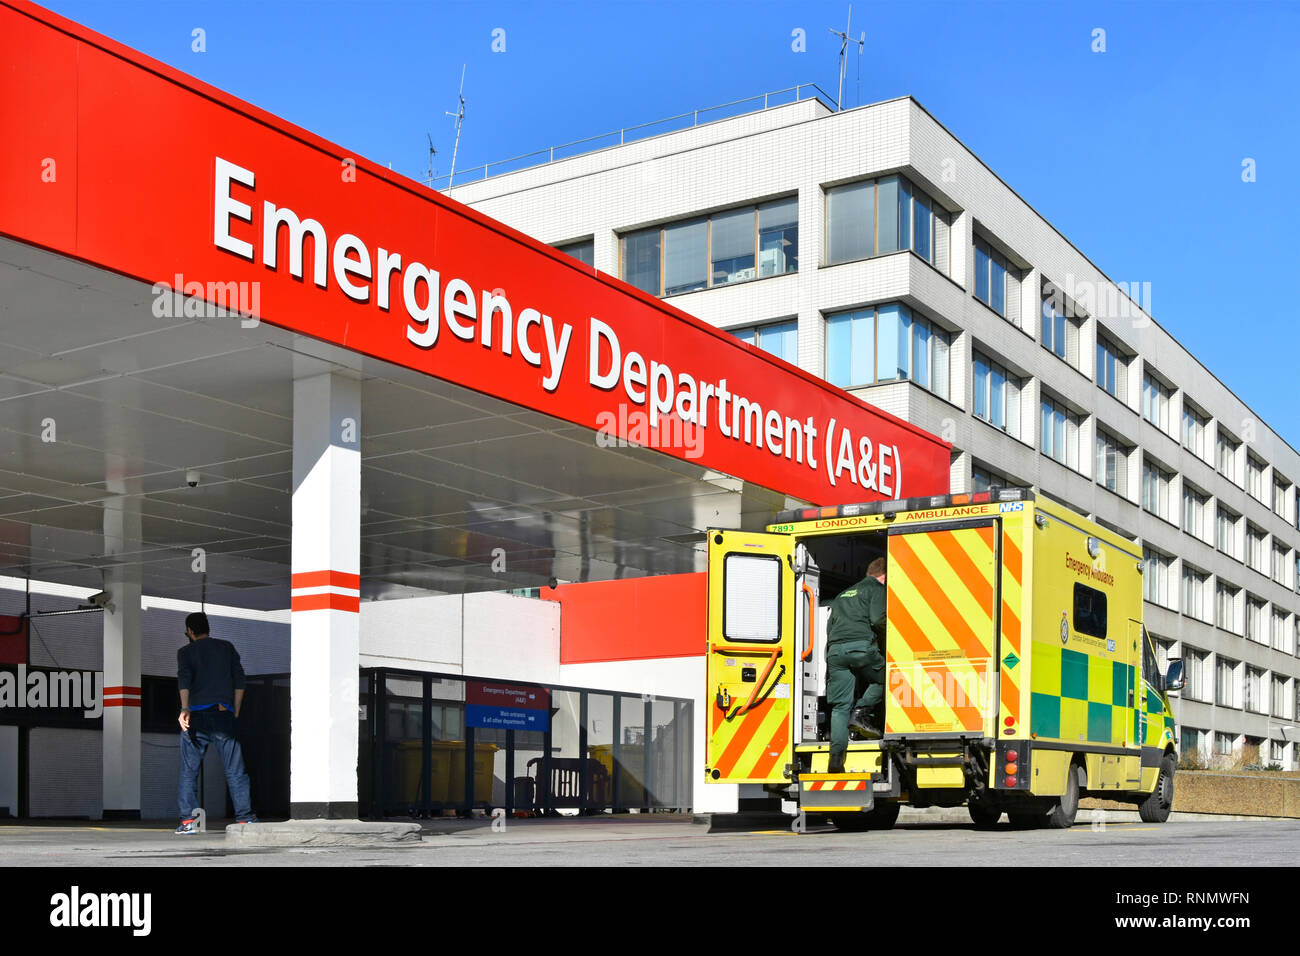 Notaufnahme A&E London NHS National Health Service Ambulance & Fahrer vor dem Eingang zum St. Thomas Hospital Gebäude Lambeth England Großbritannien Stockfoto